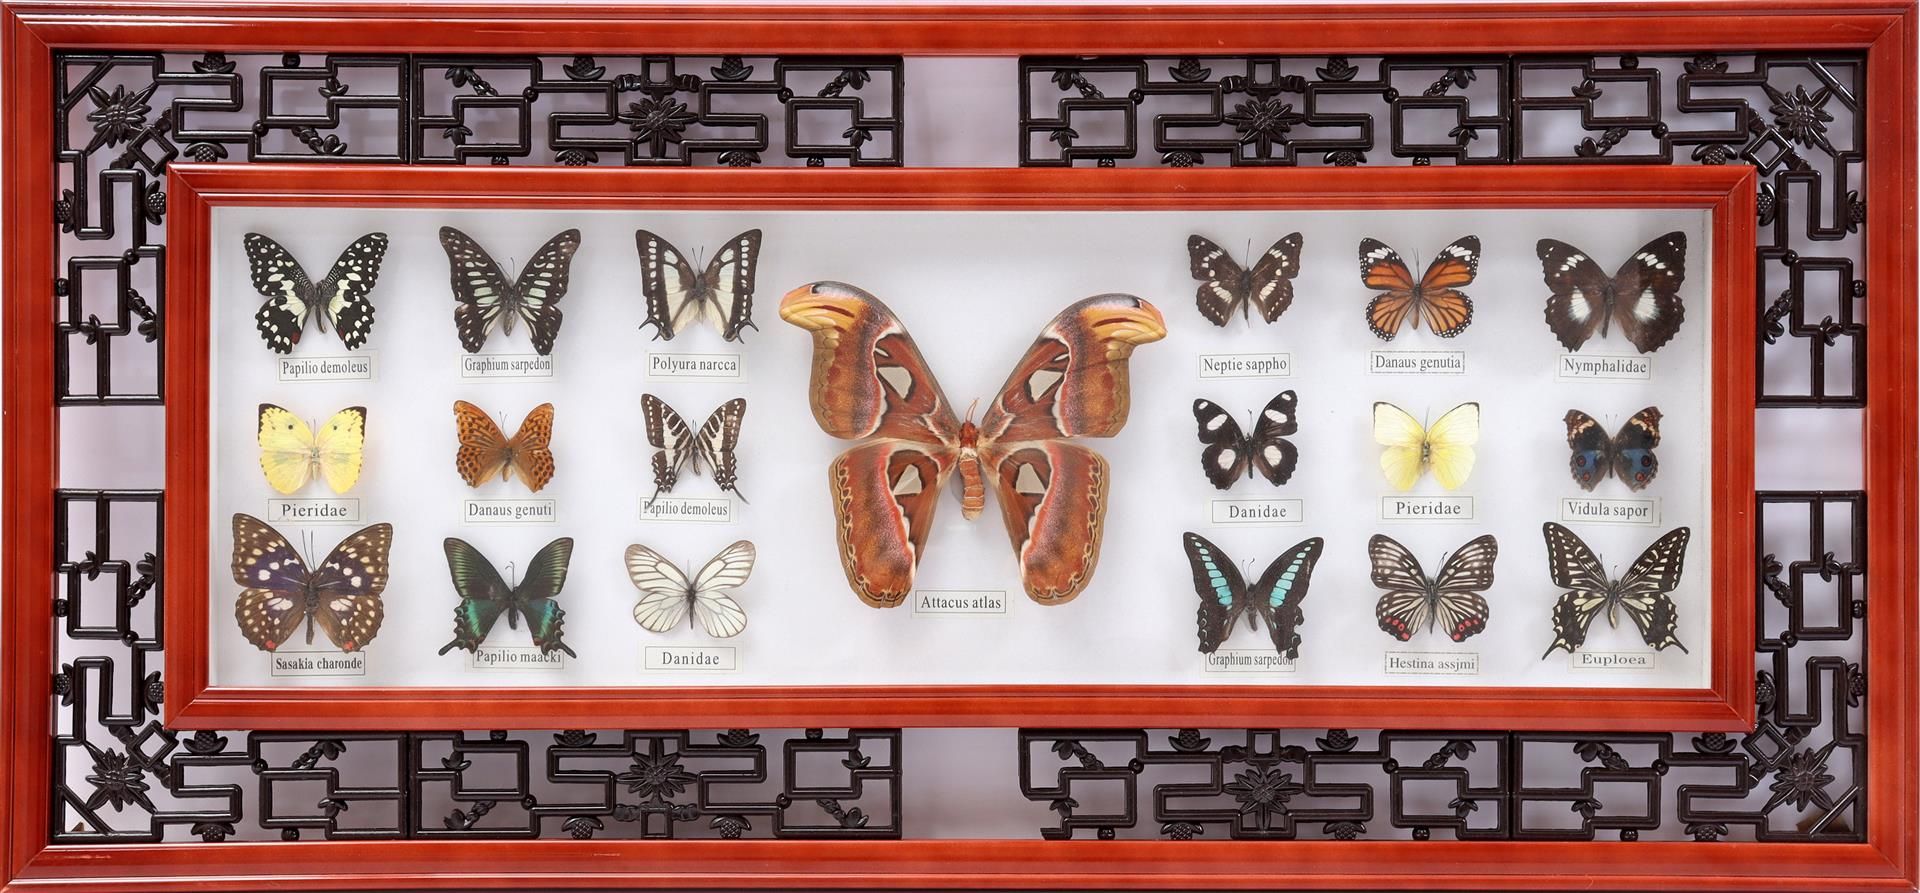 Wall decoration of 19 prepared butterflies